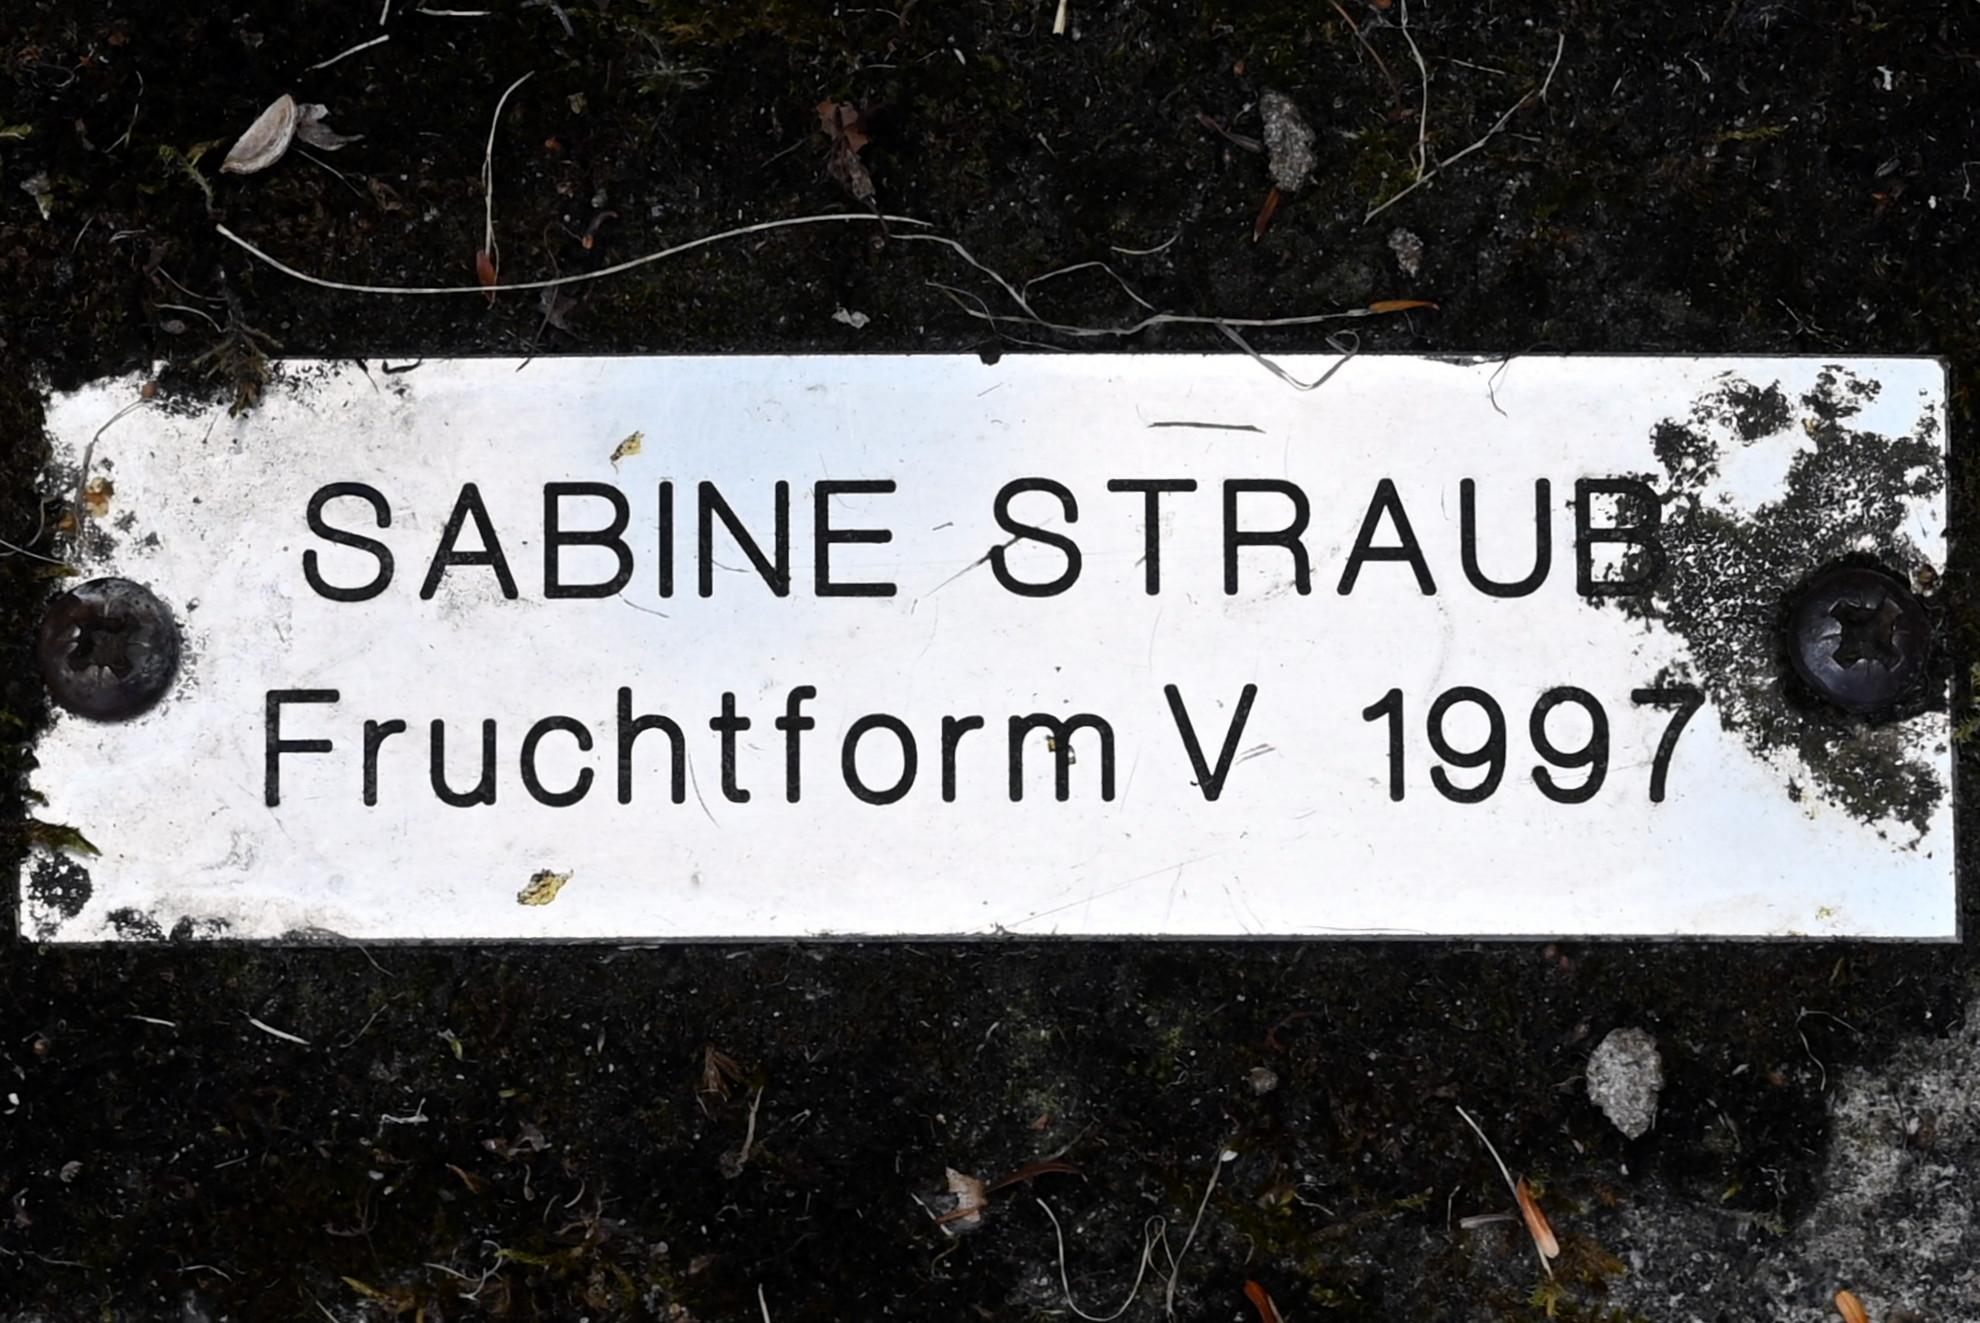 Sabine Staub (1997), Fruchtform V, Regensburg, Stadtpark, 1997, Bild 8/8